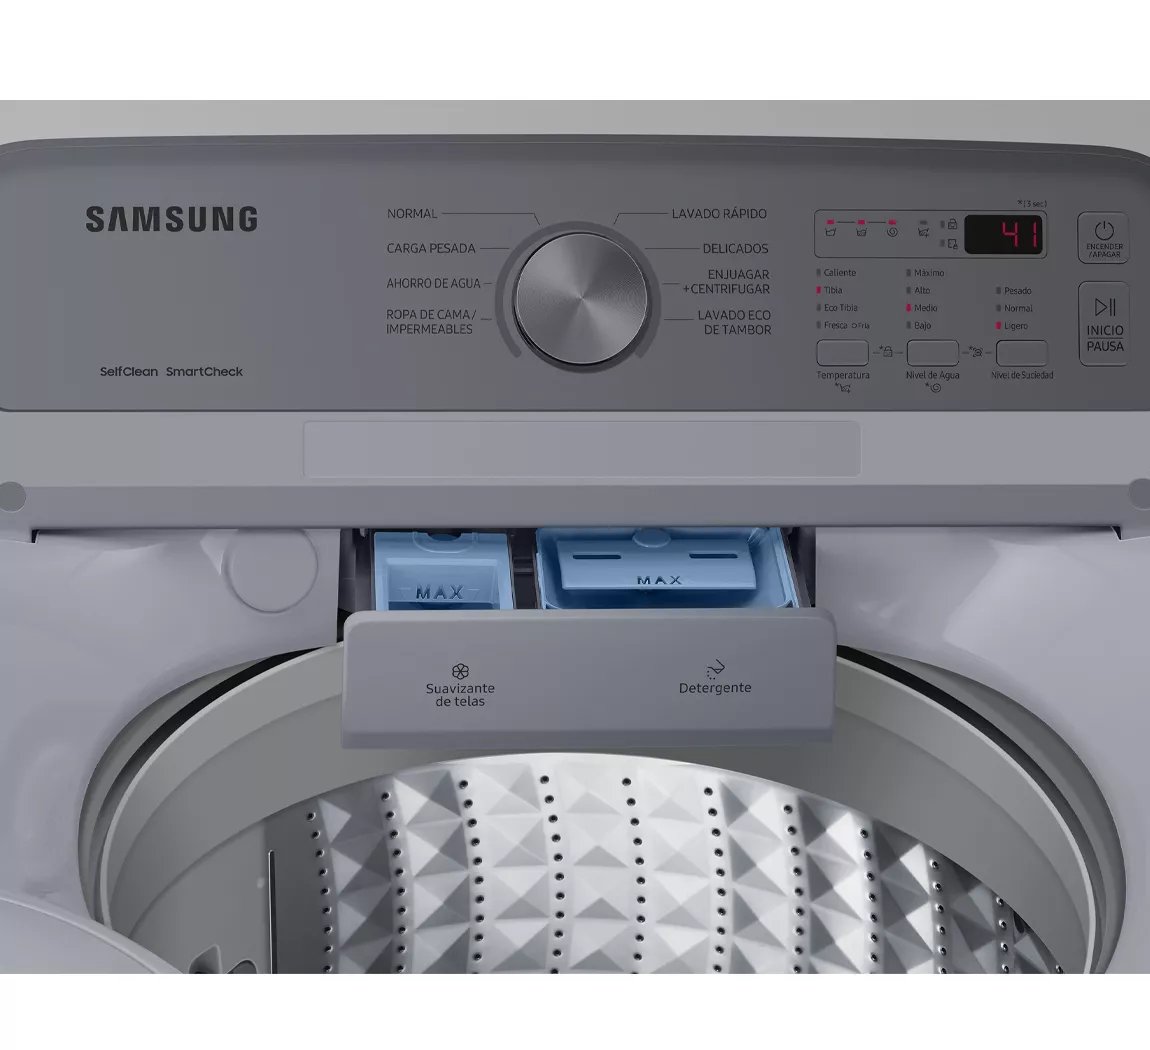 Samsung Lavadora │ 19 Kg │ 5 Niveles Temperatura │ Smart Check